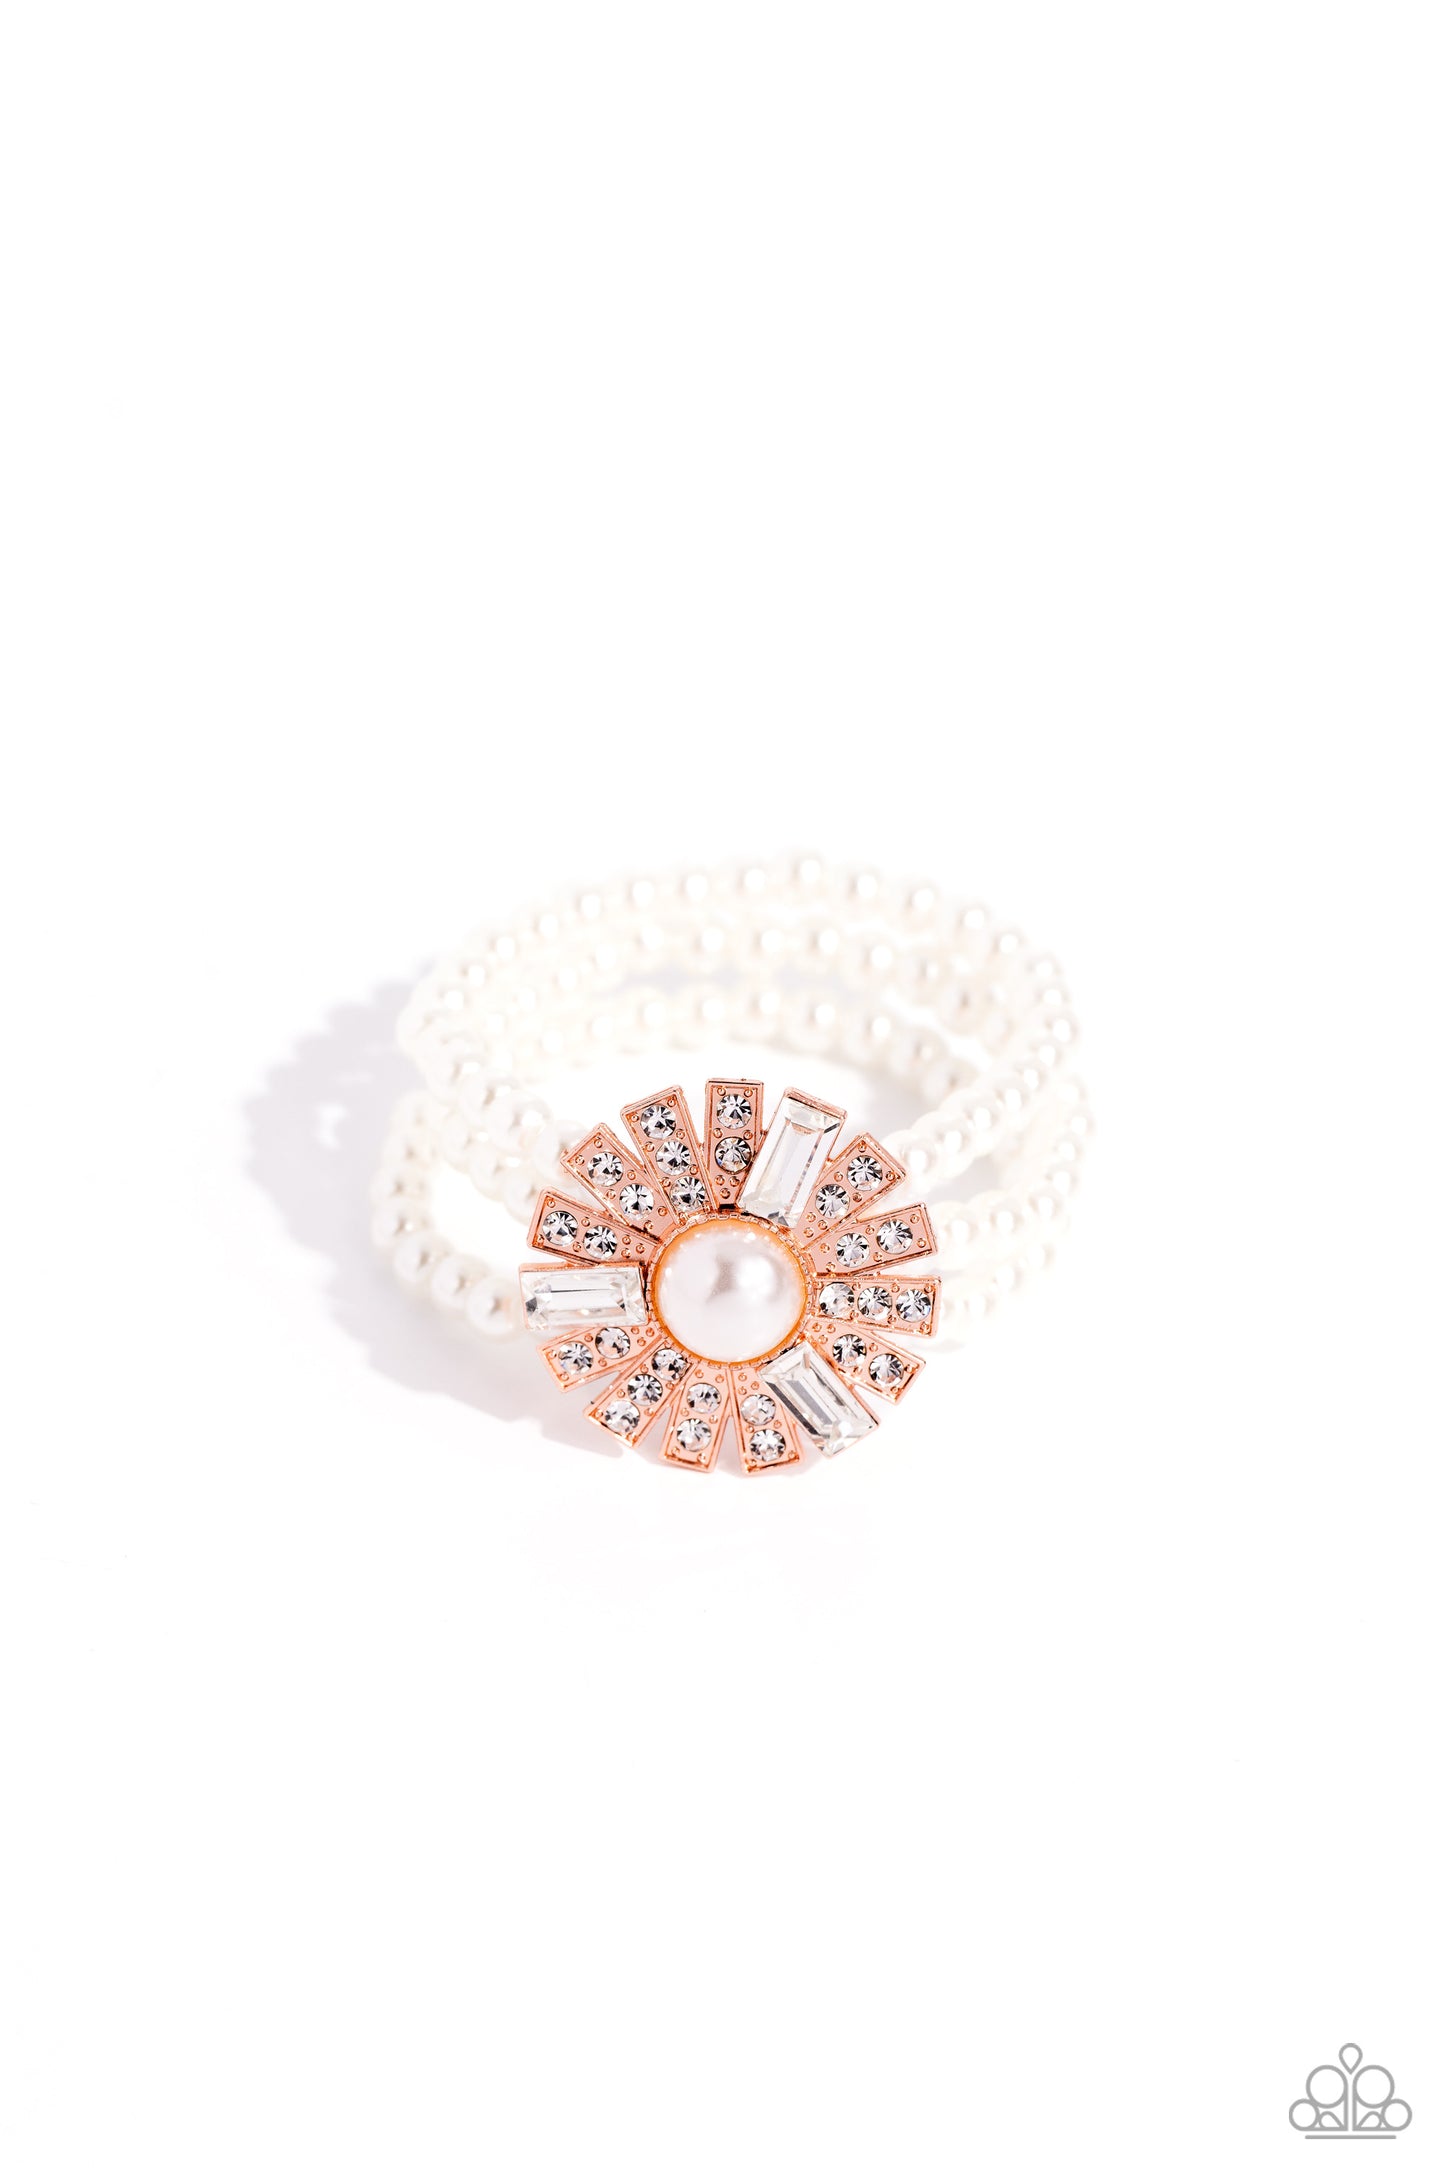 Gatsby Gallery Copper Necklace & Bracelet Set - Paparazzi Accessories